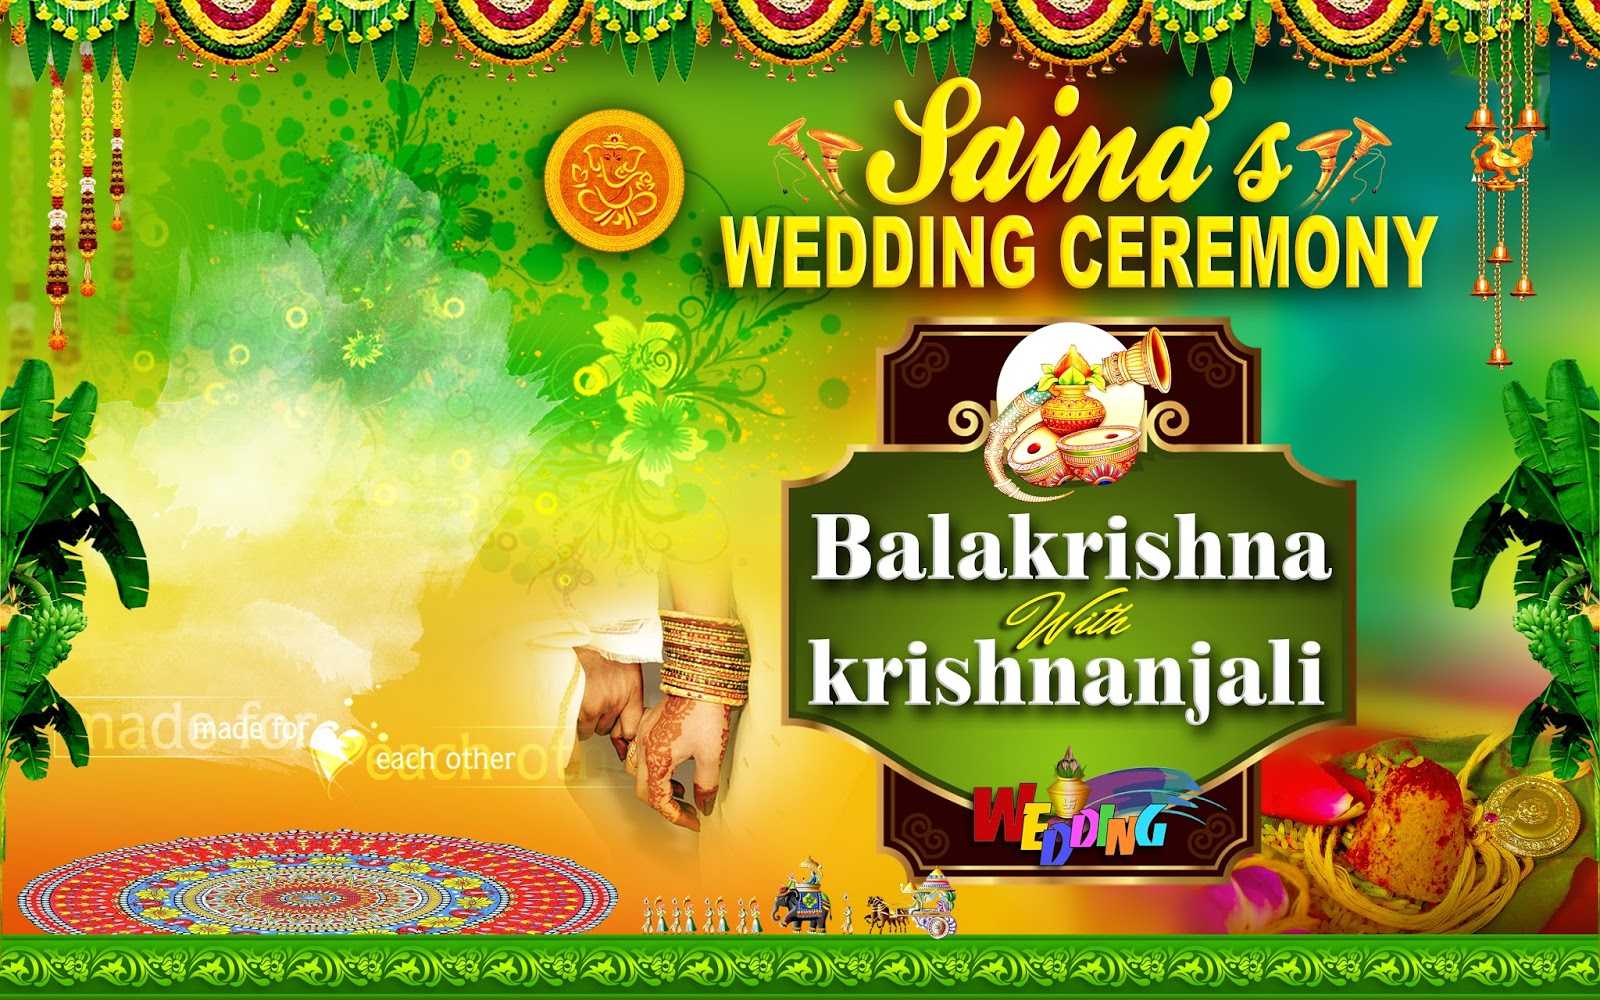 Wedding Banner Design Free Download | Naveengfx Regarding Wedding Banner Design Templates